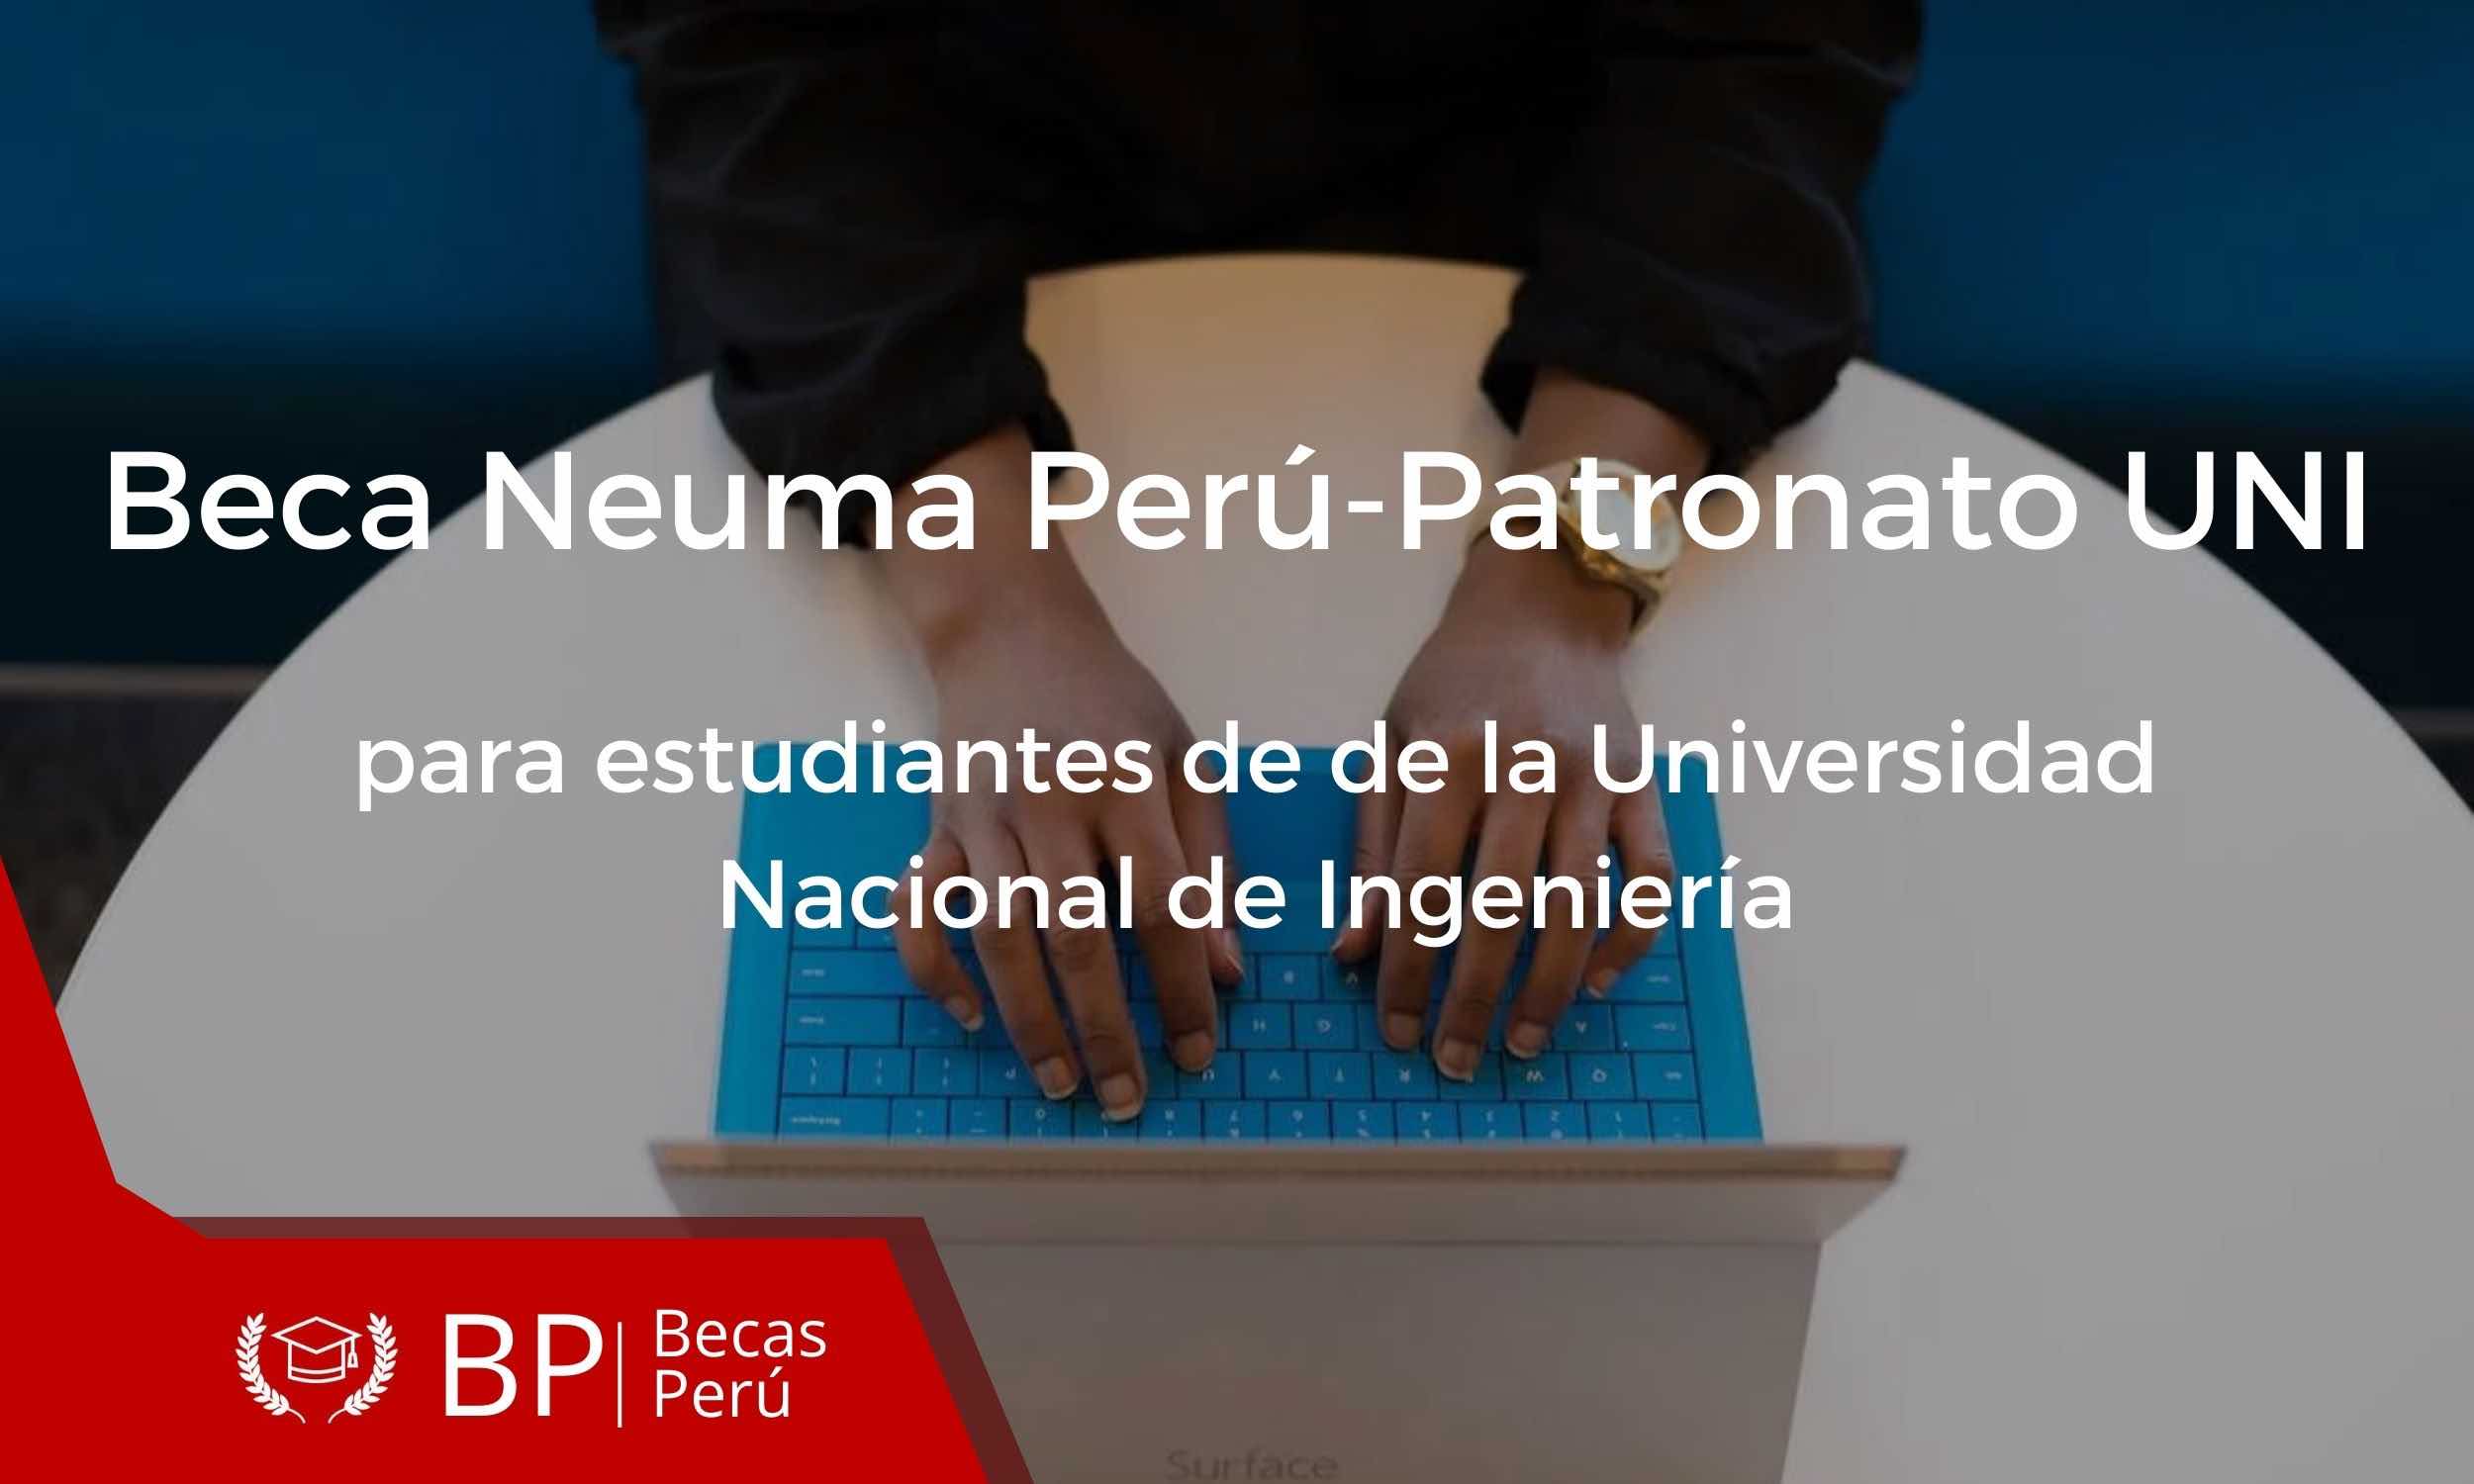 Beca Neuma Perú-Patronato UNI